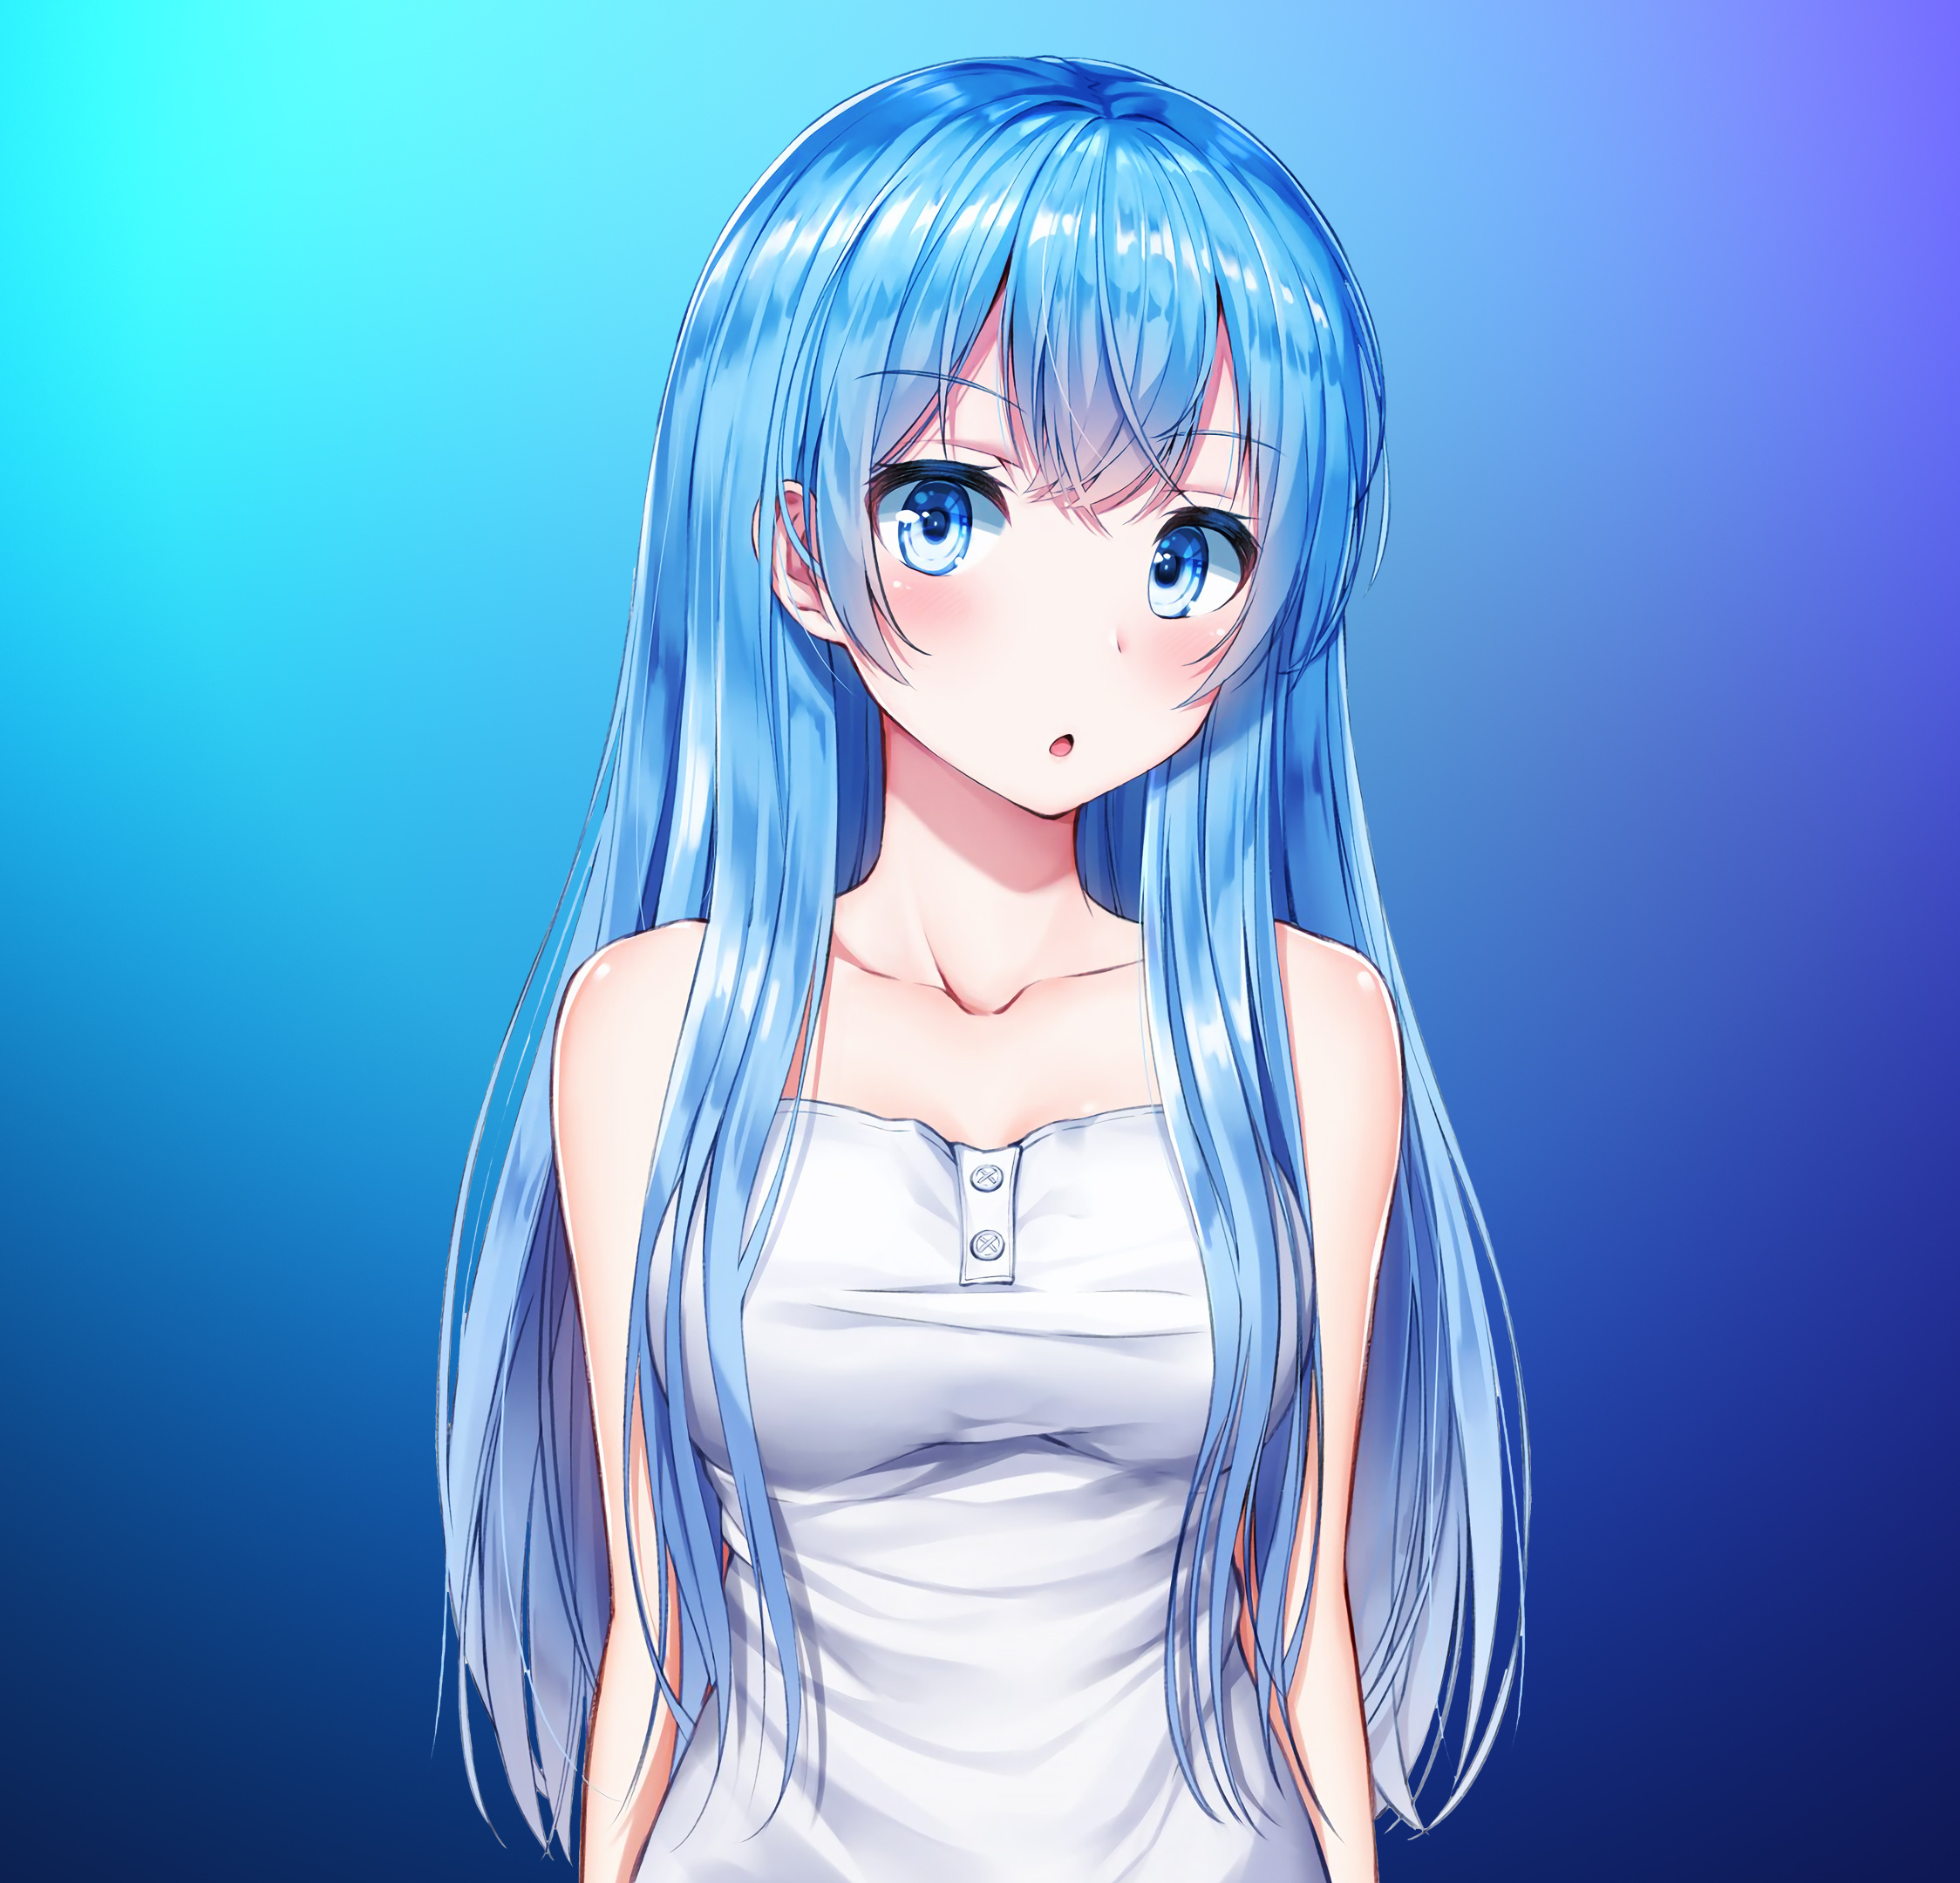 Top 97+ Wallpaper Anime Girl With Headphones And Blue Hair Full HD, 2k, 4k